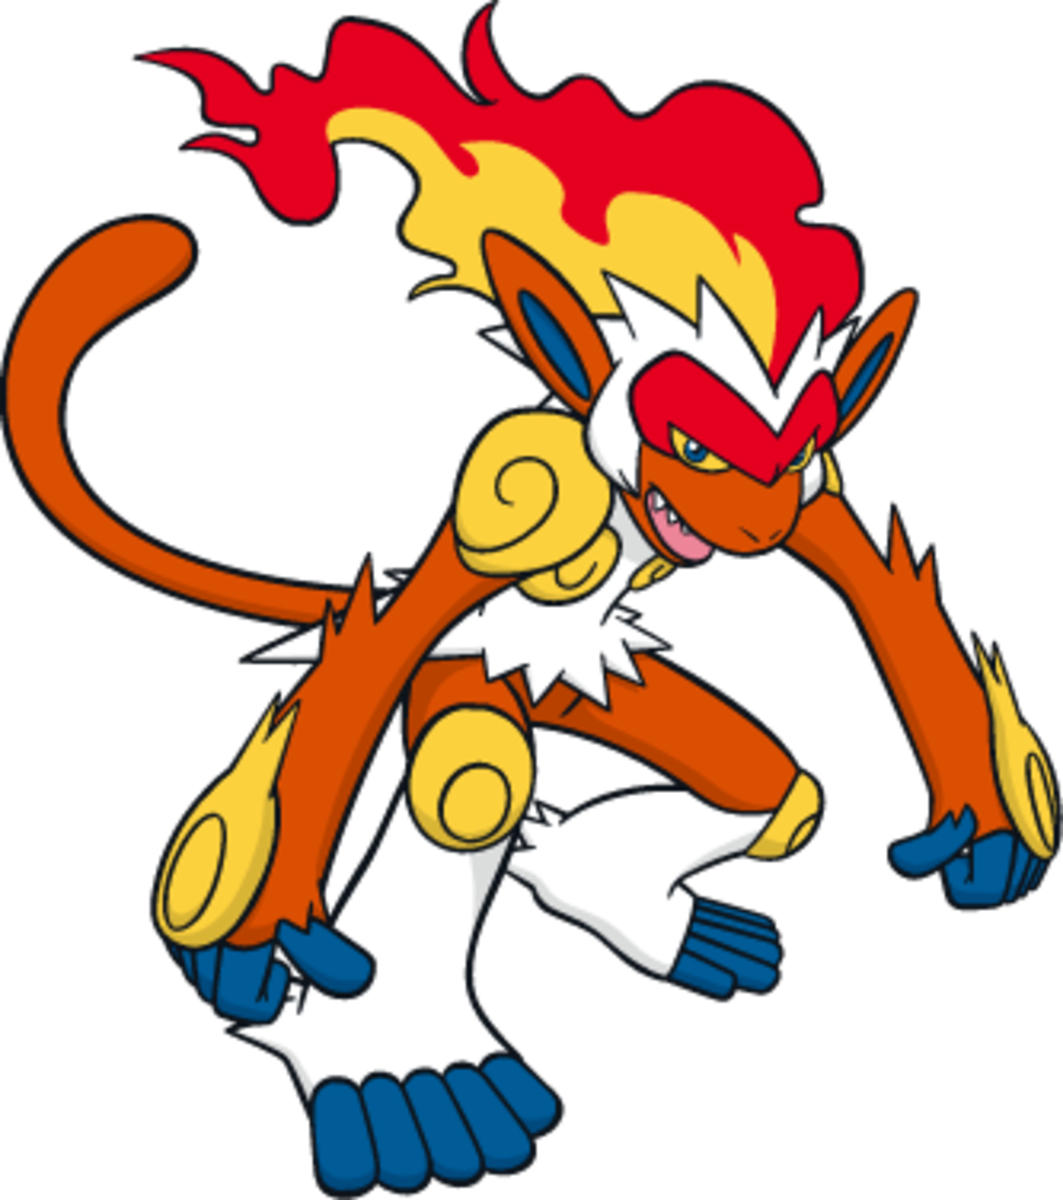 Infernape, the "flame" Pokémon